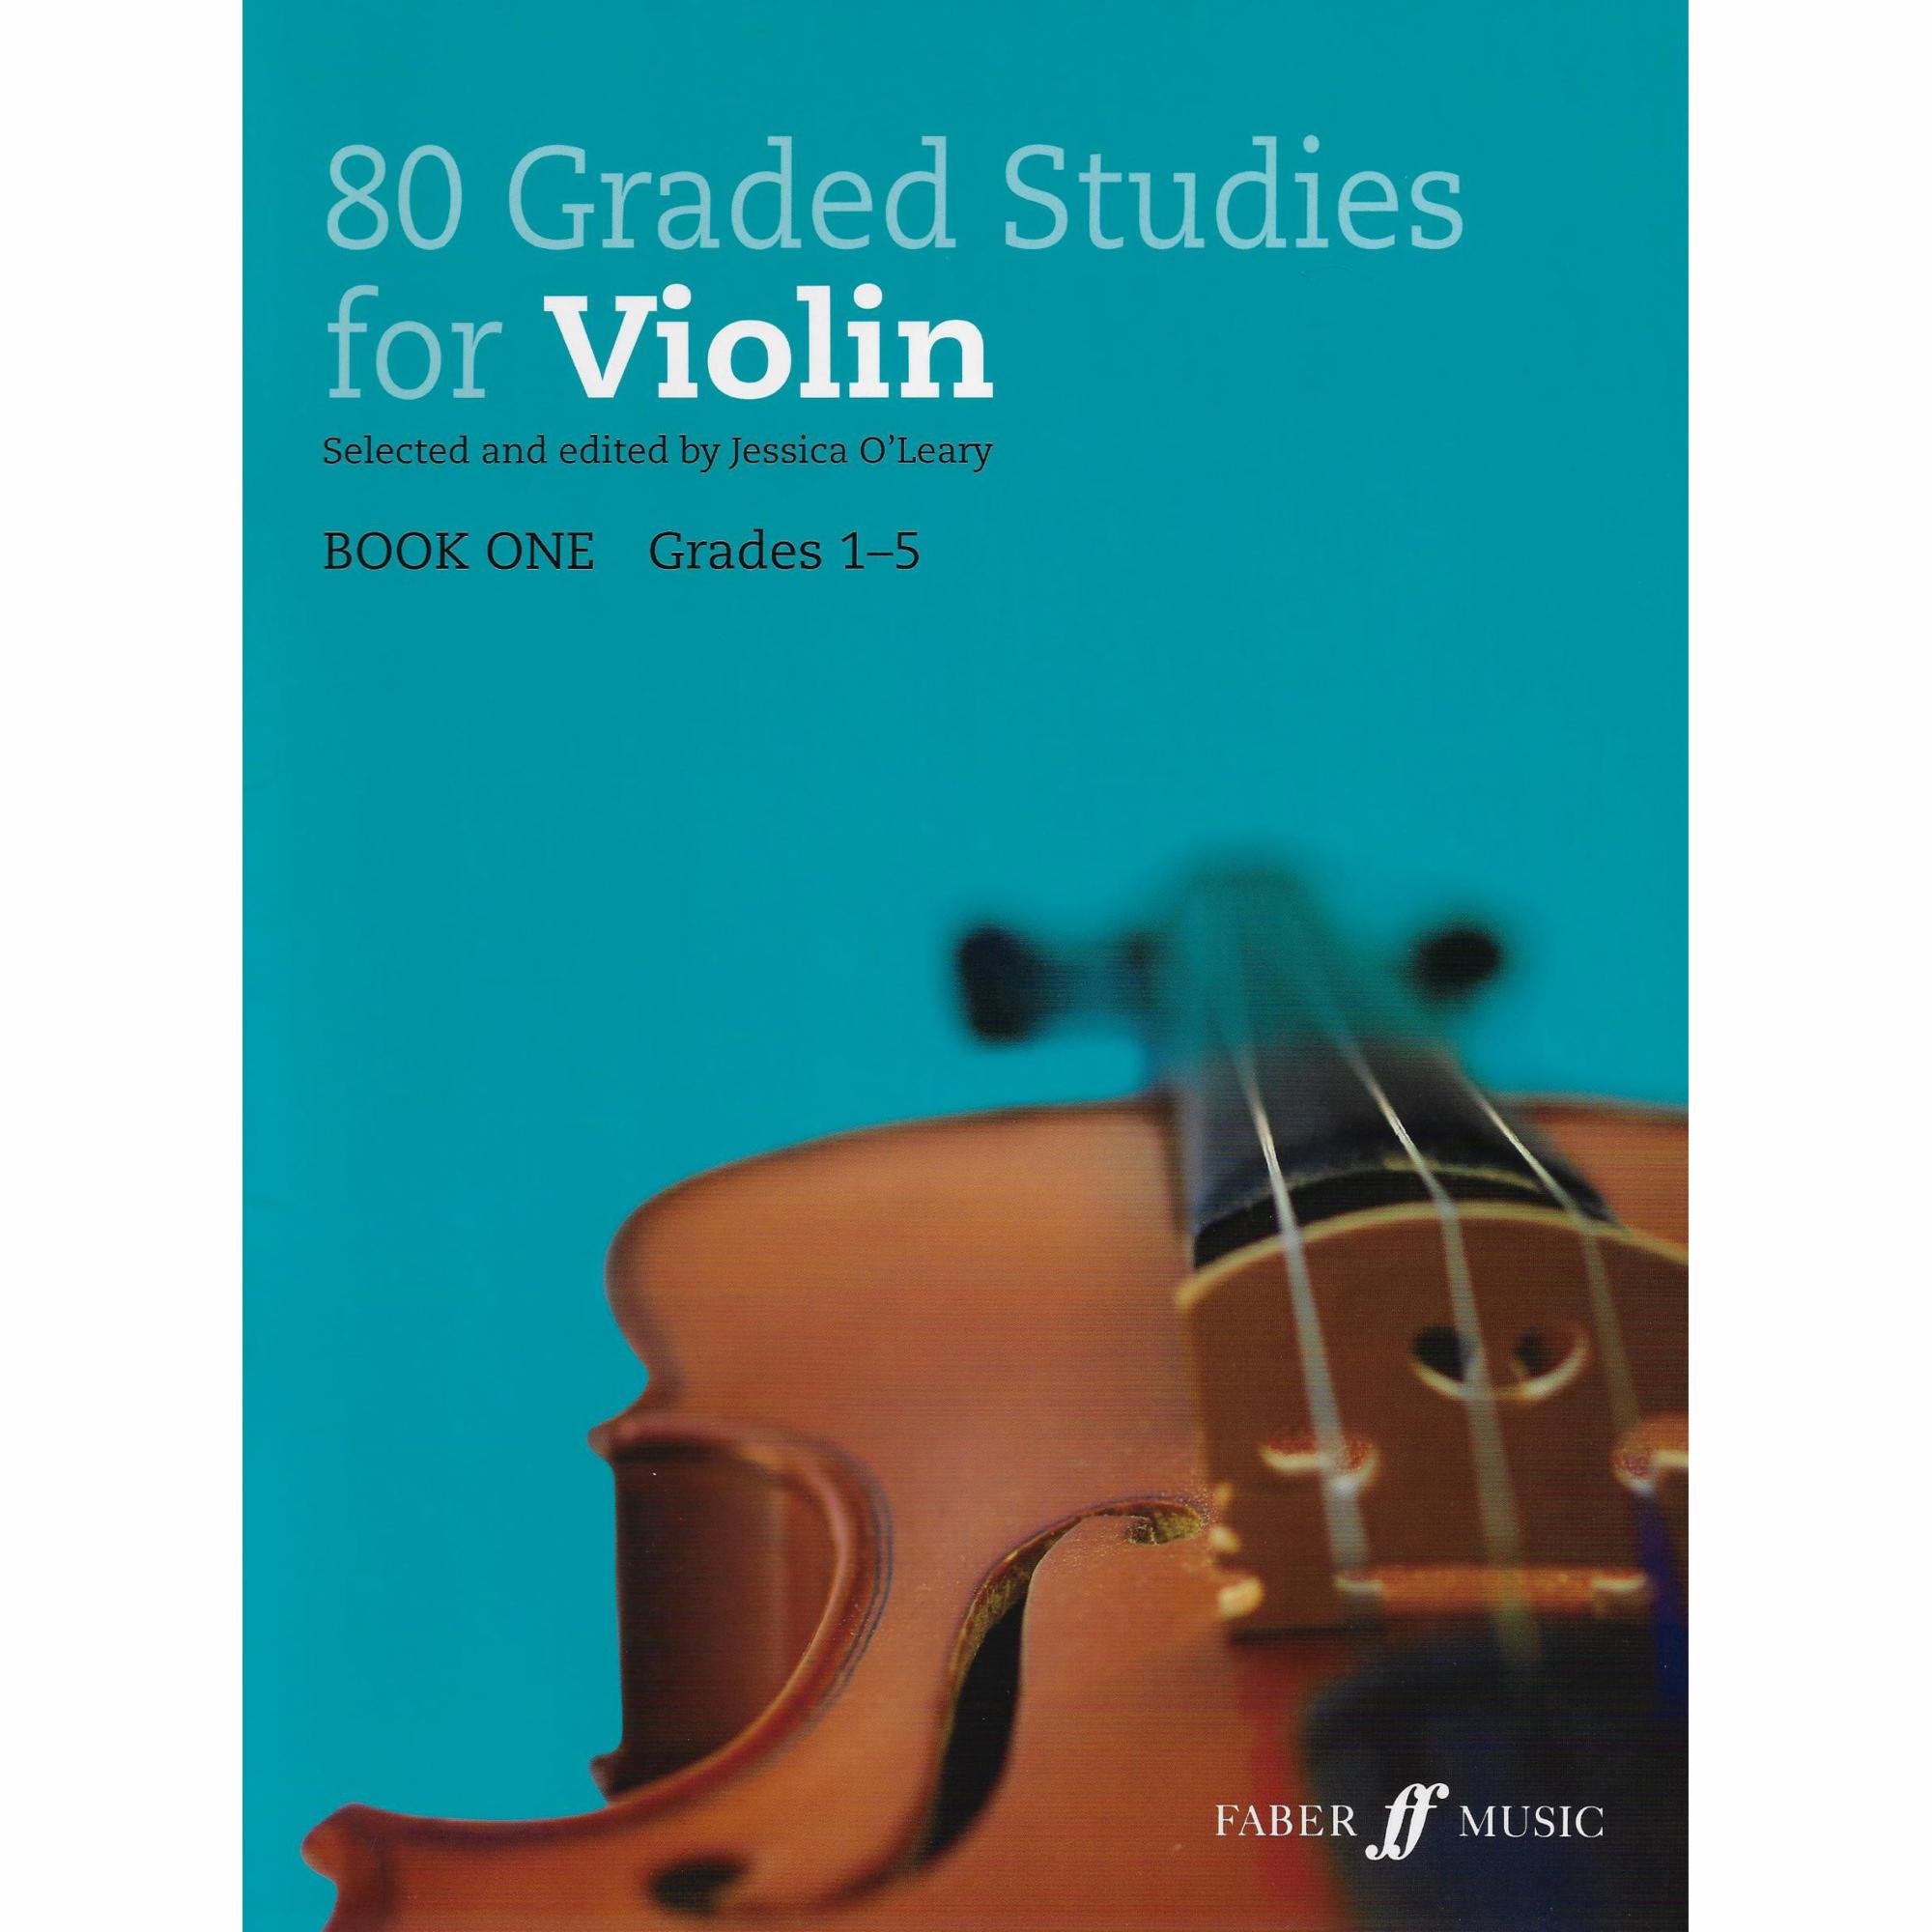 80 Graded Studies, Books 1-2 for Violin